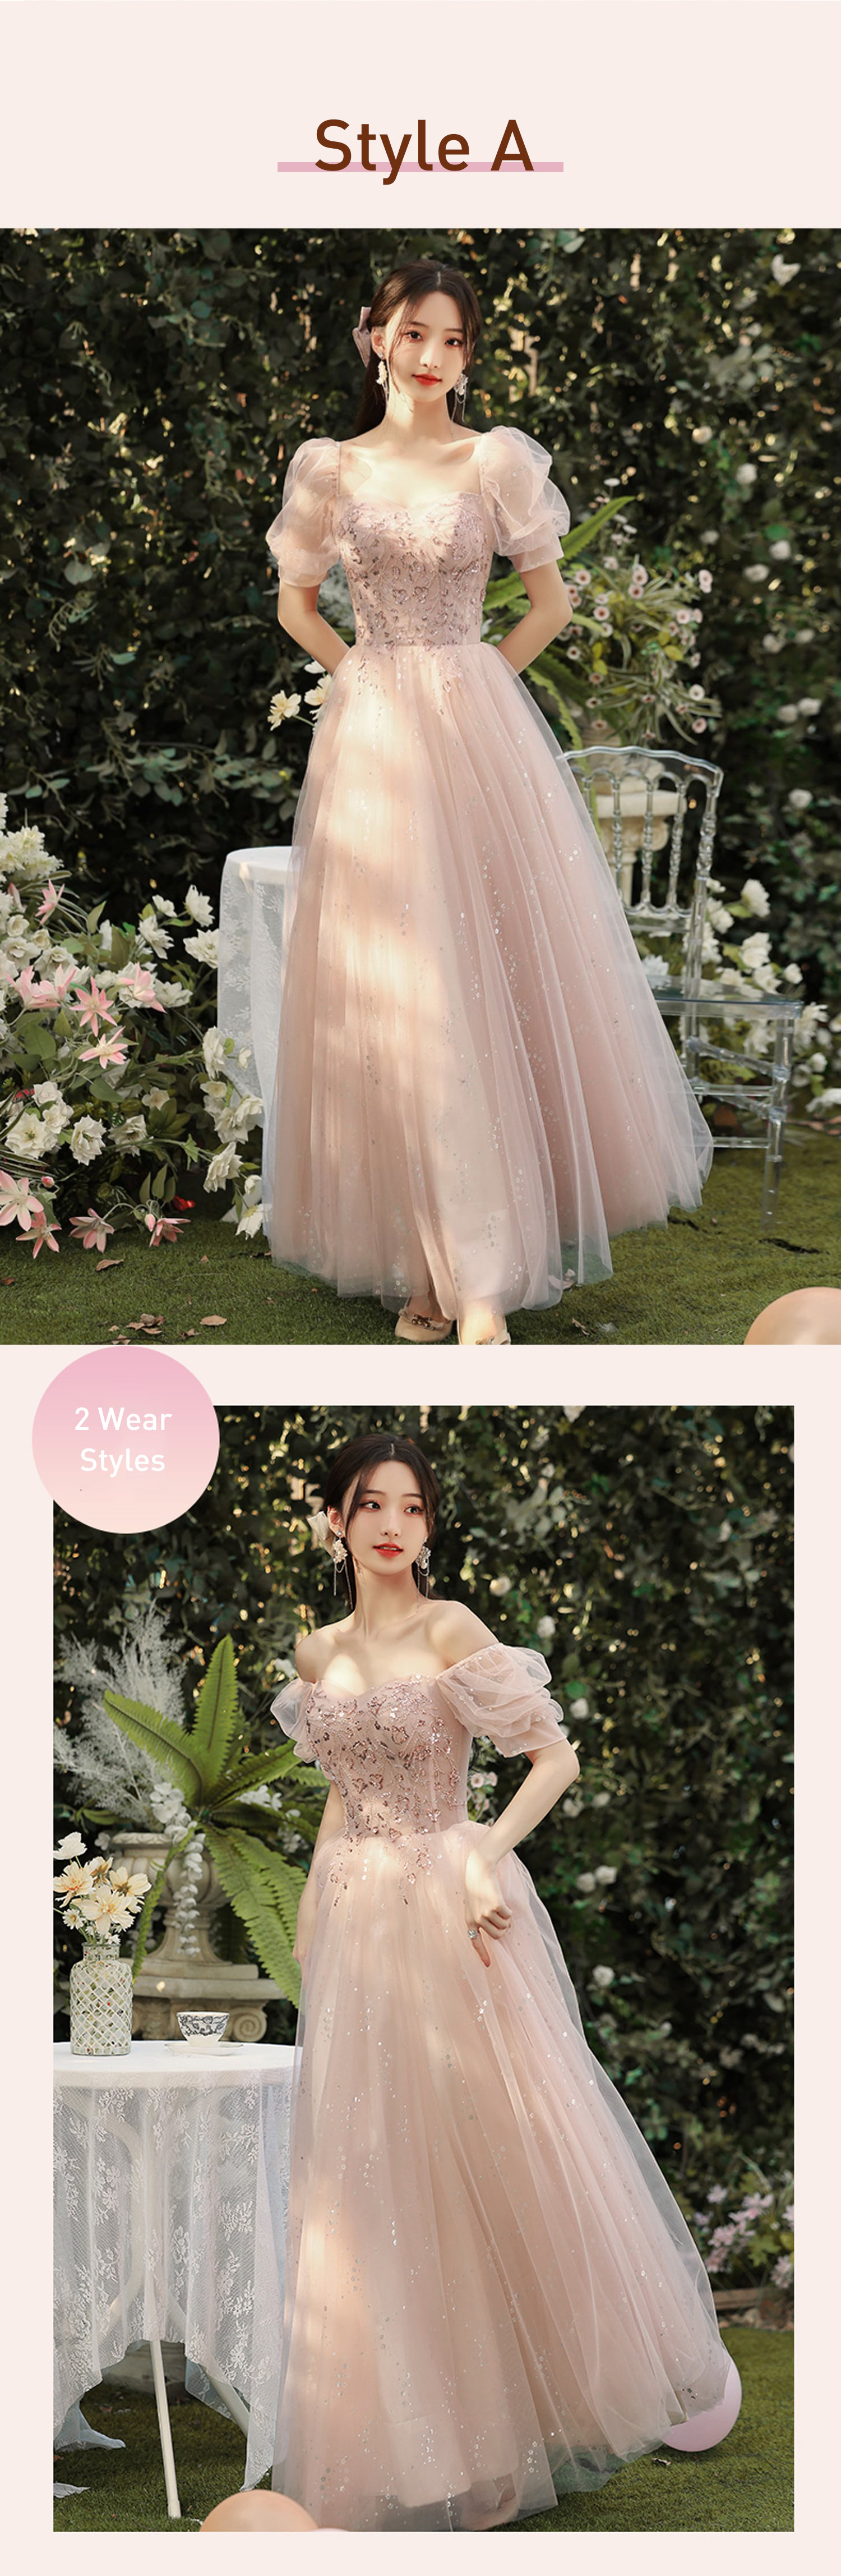 Aesthetic-Pink-Bridal-Wedding-Party-Bridesmaid-Long-Maxi-Dress19.jpg